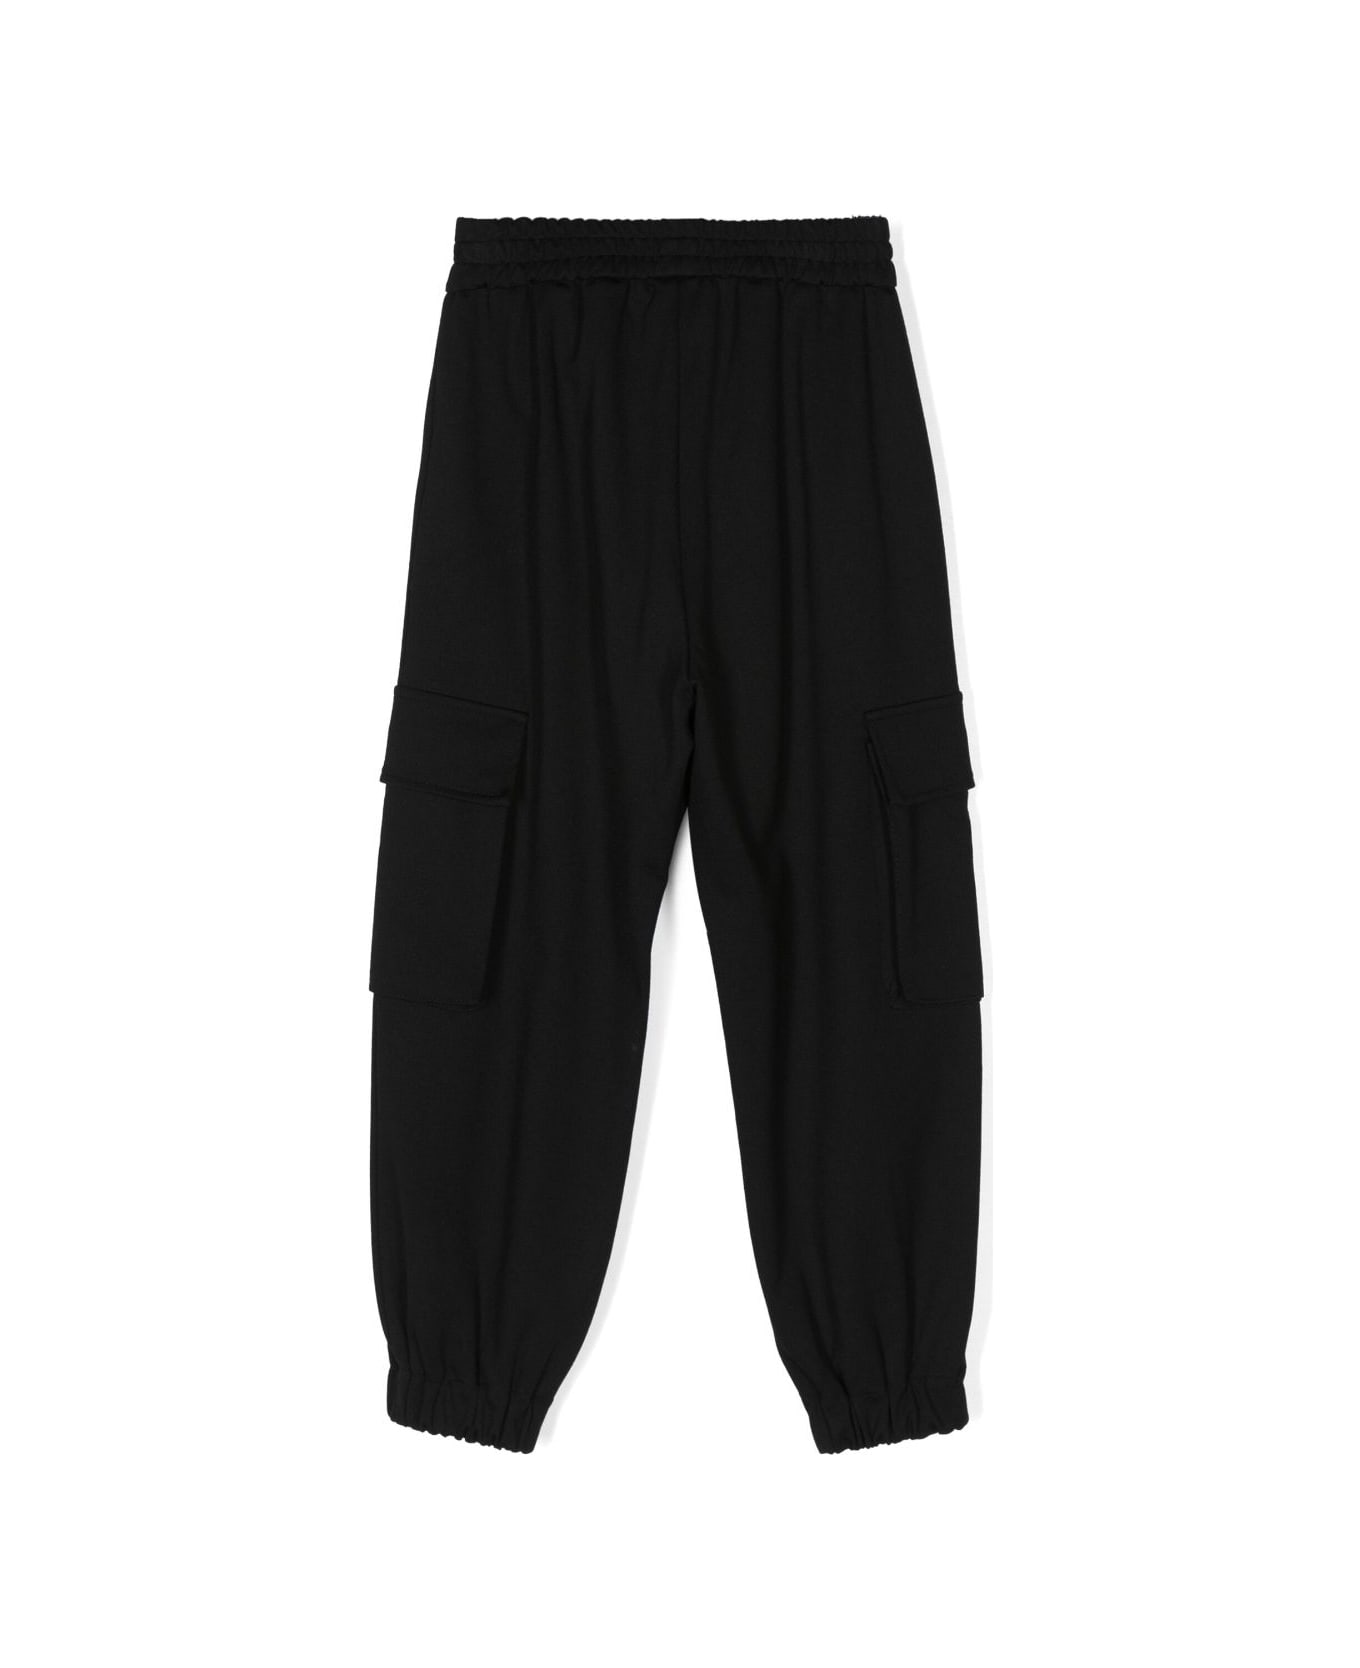 Balmain Sport Trousers - Black ボトムス